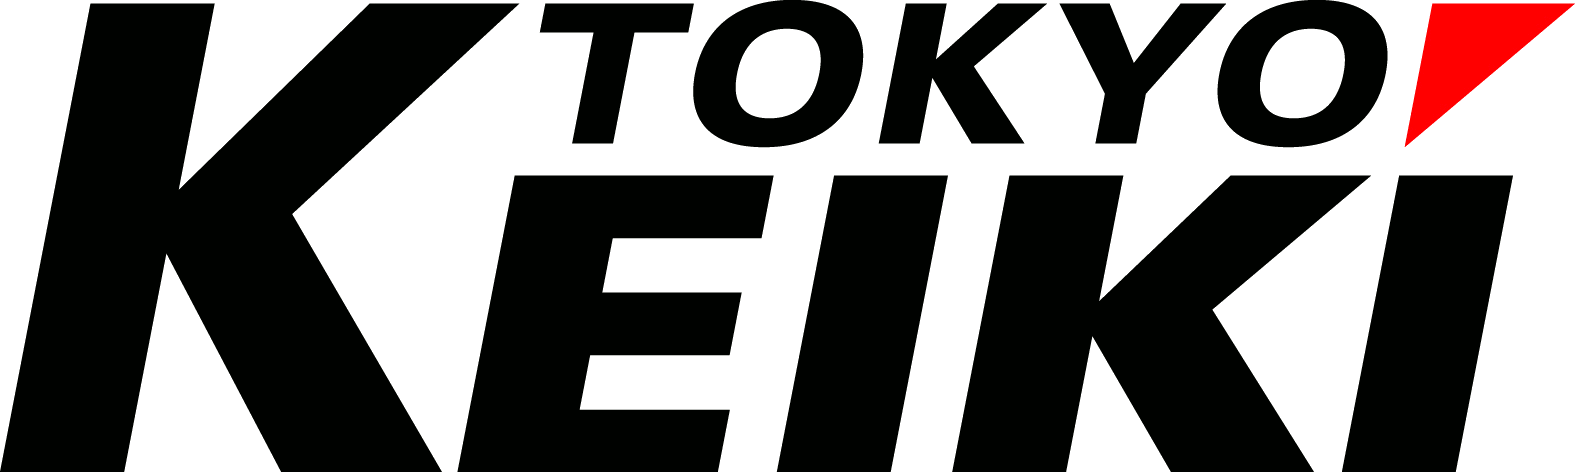 Logo for Tokyo Keiki